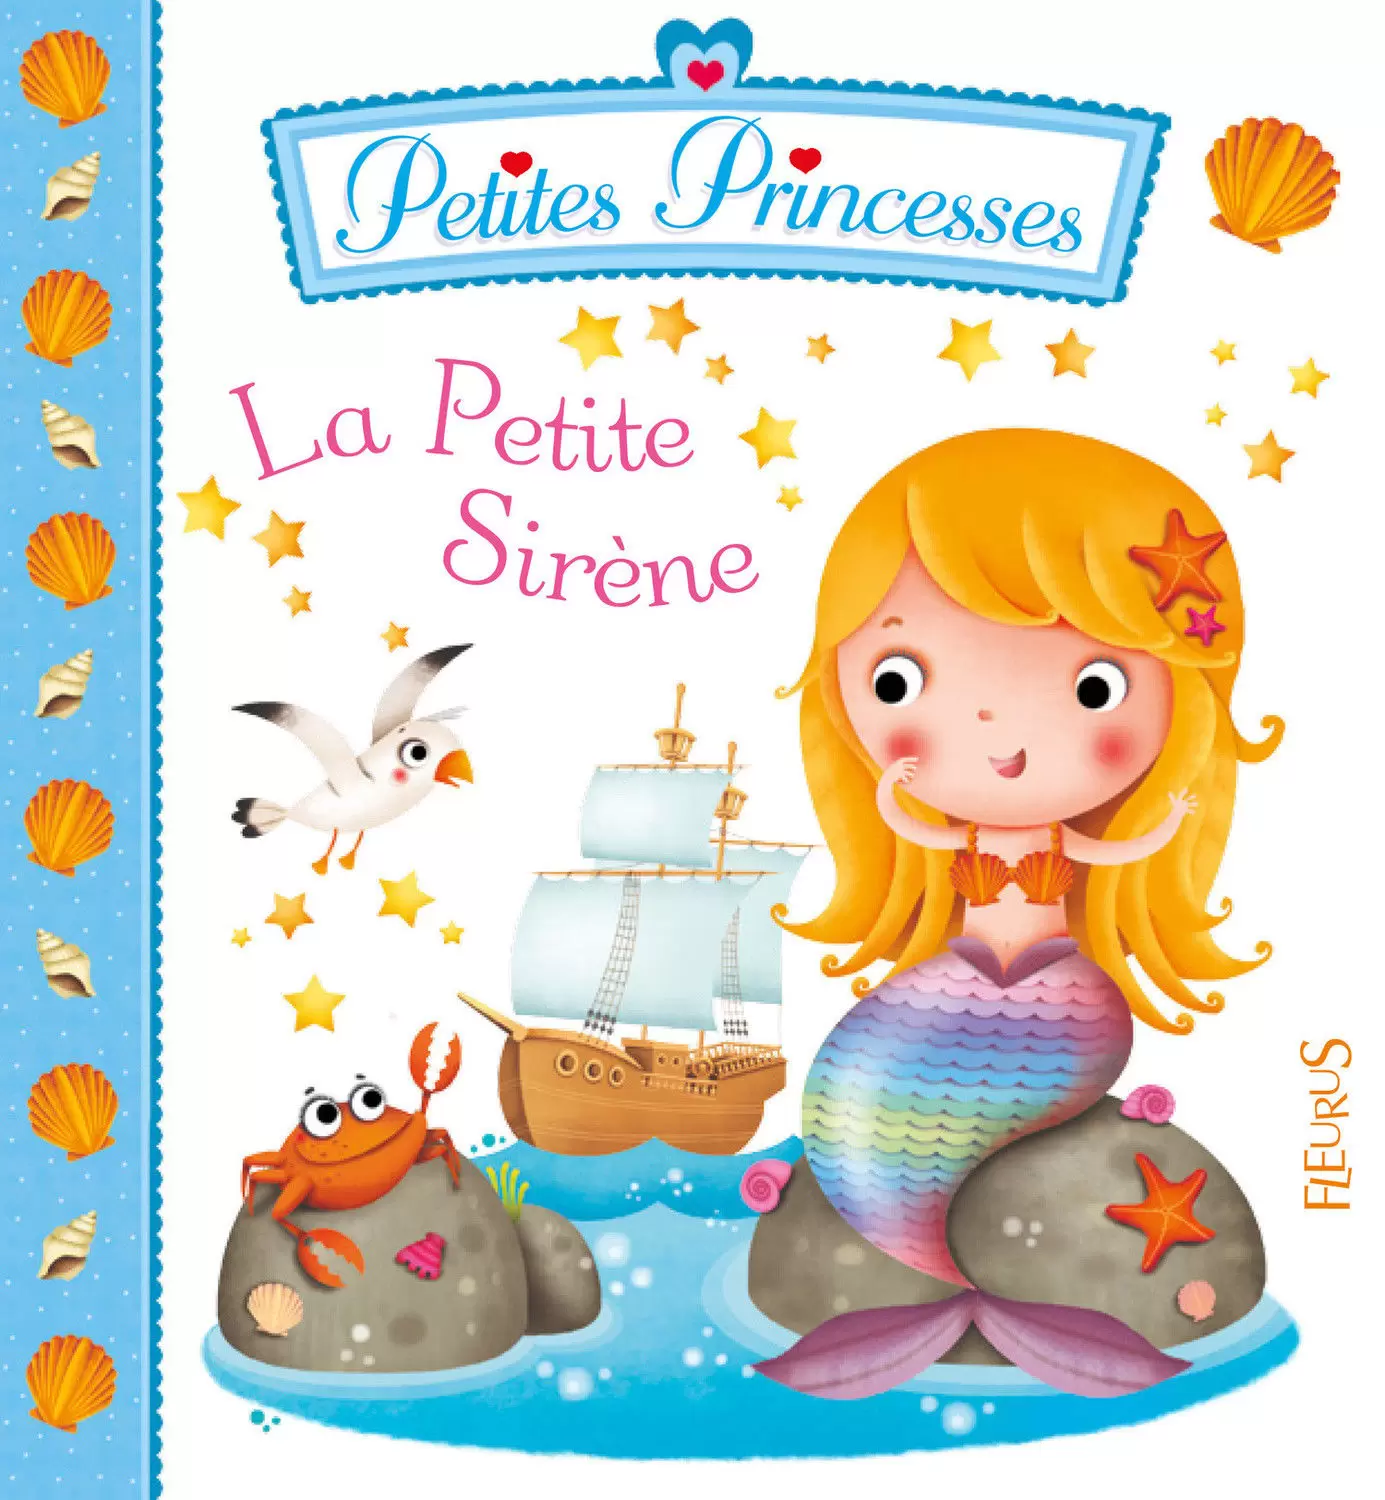 Petites princesses - La petite sirène